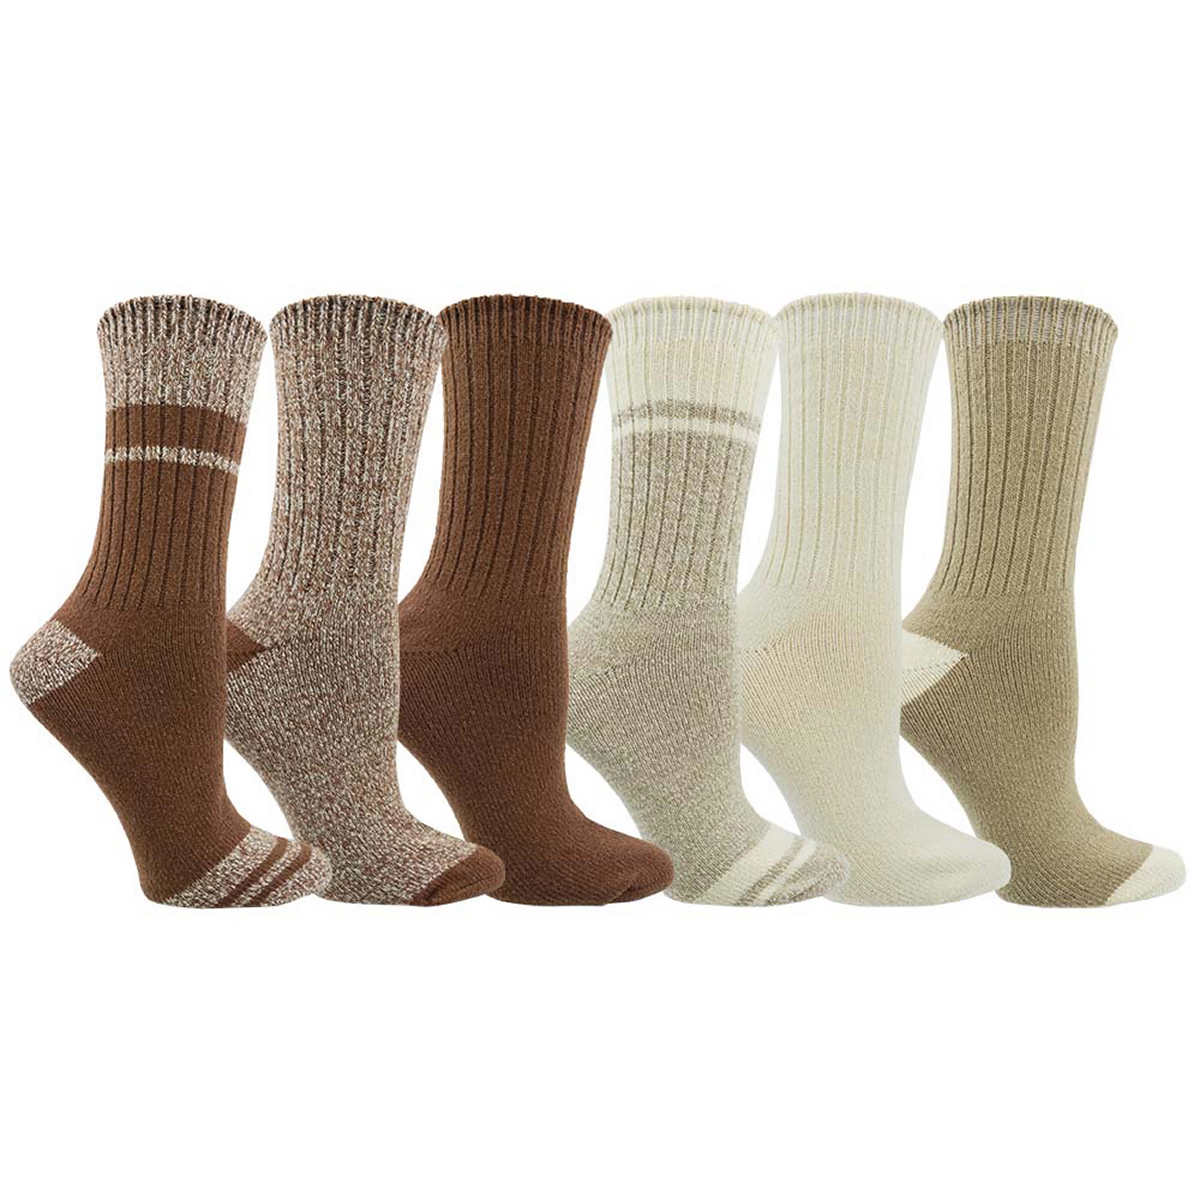 Roots - Ladies Cozy Crew Socks, 6 Pairs, Pink/Grey